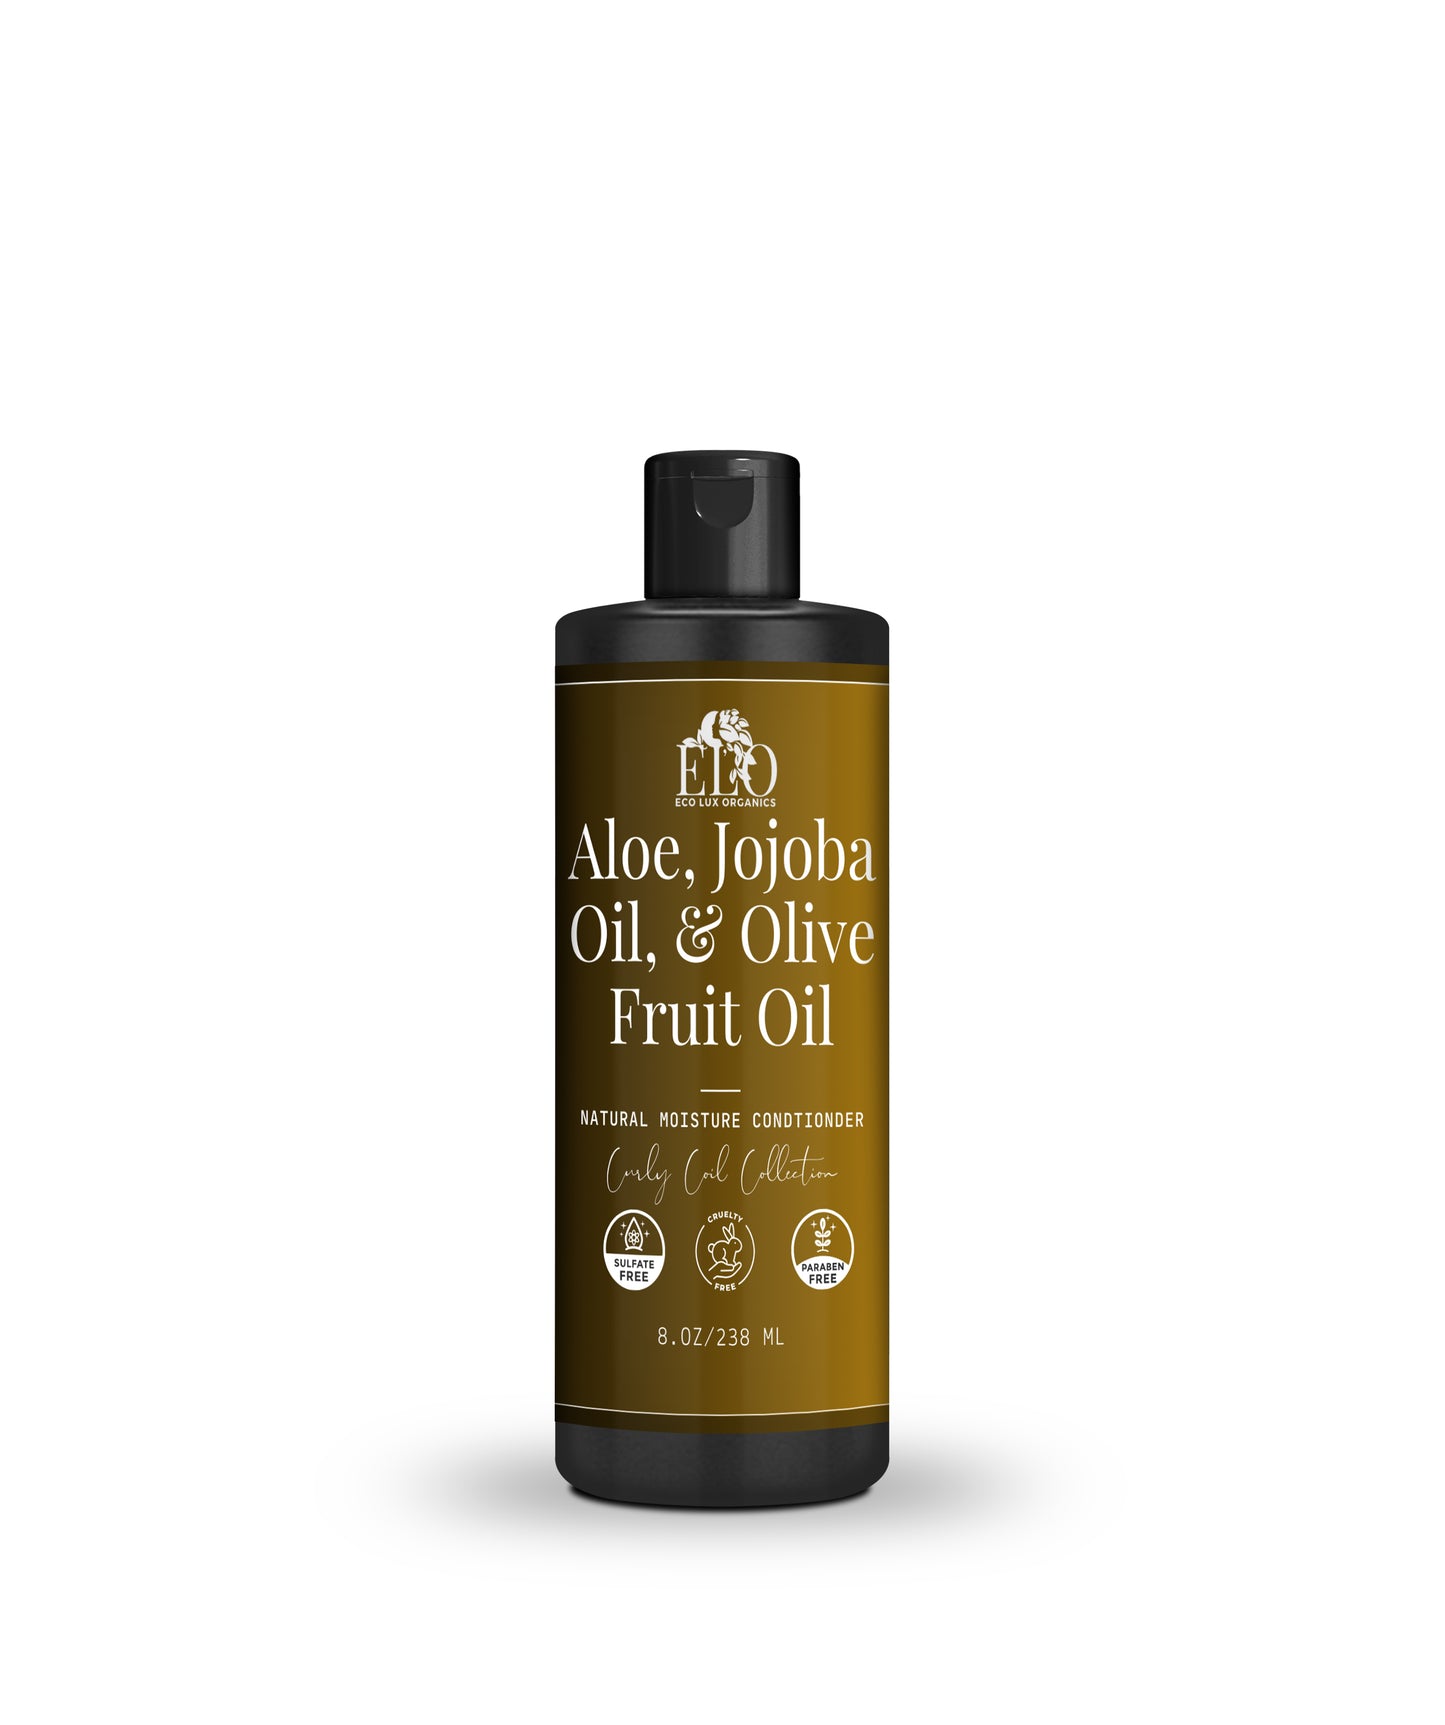 Aloe, Jojoba Oil, & Olive Fruit Oil Conditioners